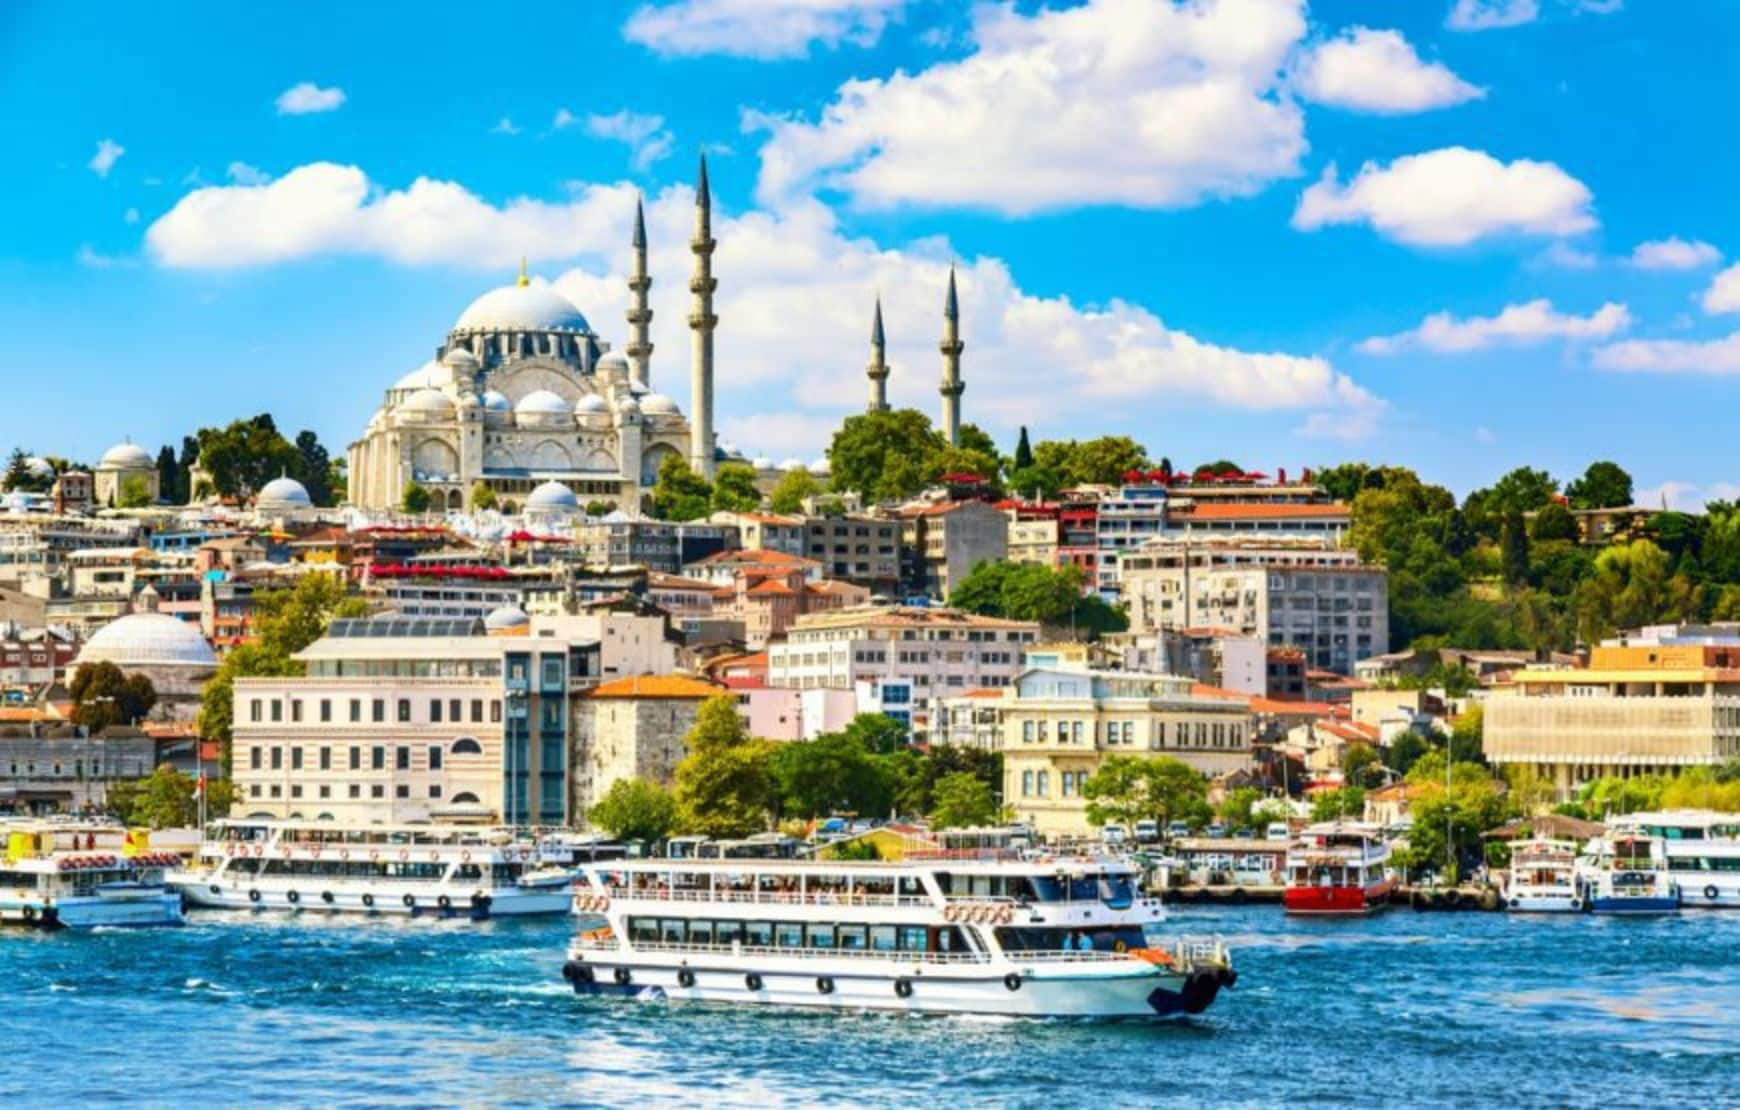 Bosphorus View of Blue Mosque